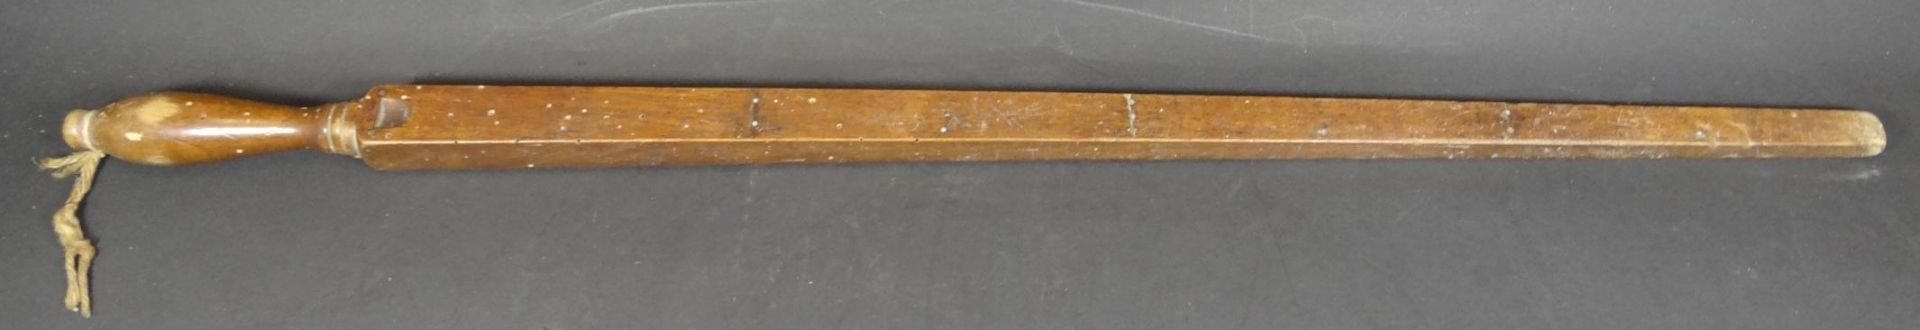 alte Holz-Elle, alter Wurmbefall, L-70 cm